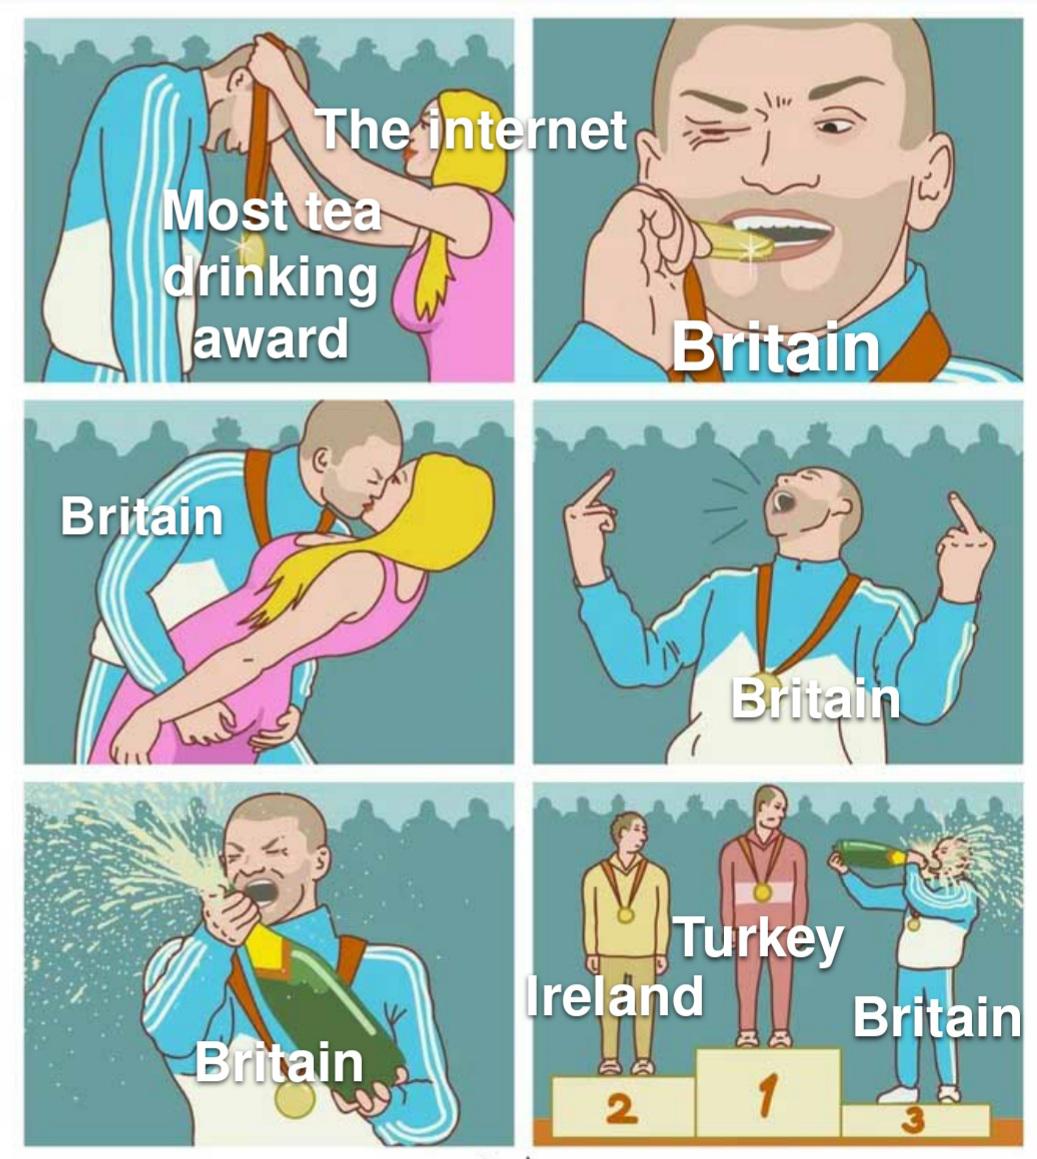 funny memes - cartoon - The internet Most tea drinking award Britain @ Britain Britain 2 Ireland Britain Lob Turkey 1 Britain